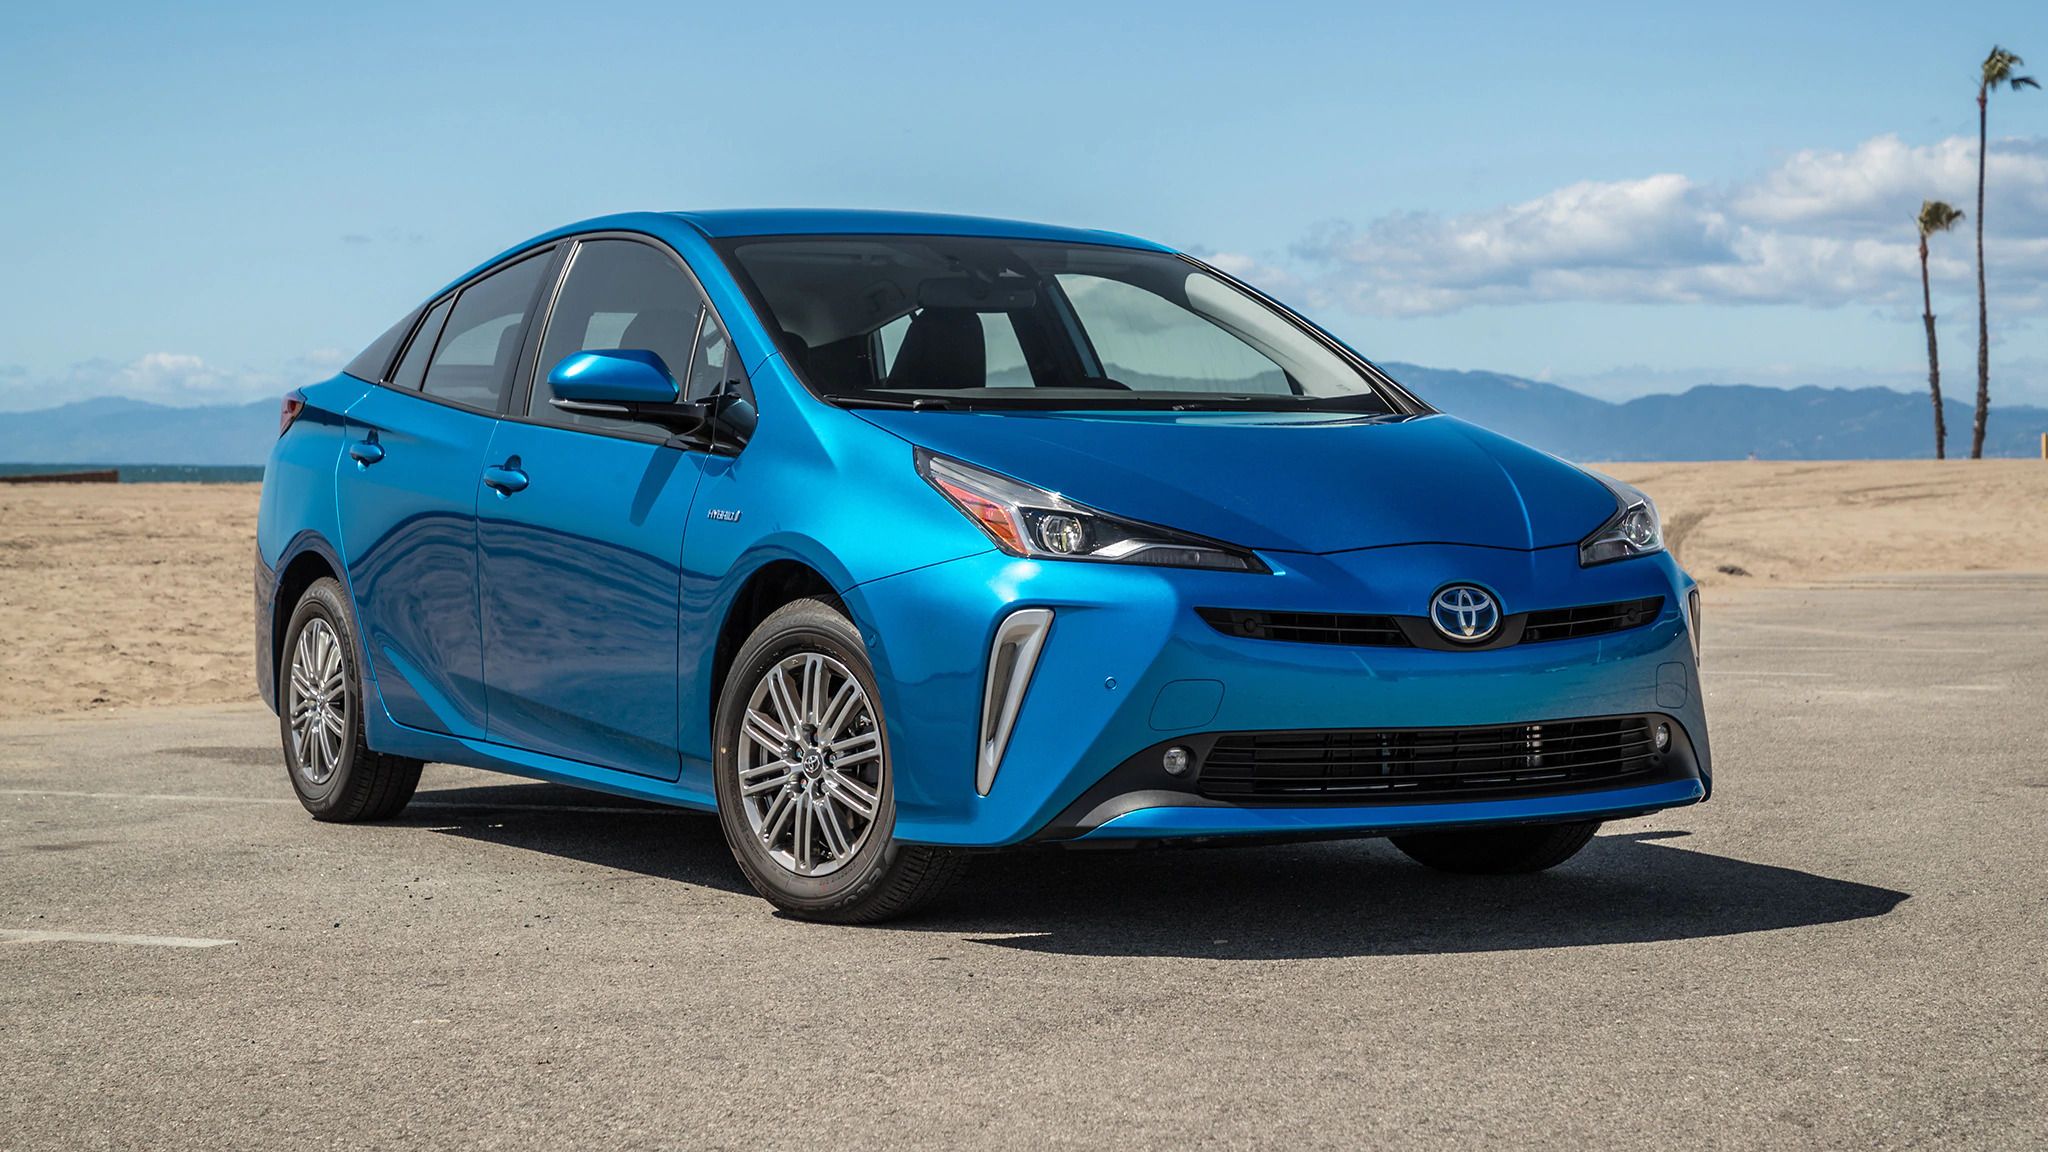 Toyota Prius ranks high on eveyone's list of used hybrids